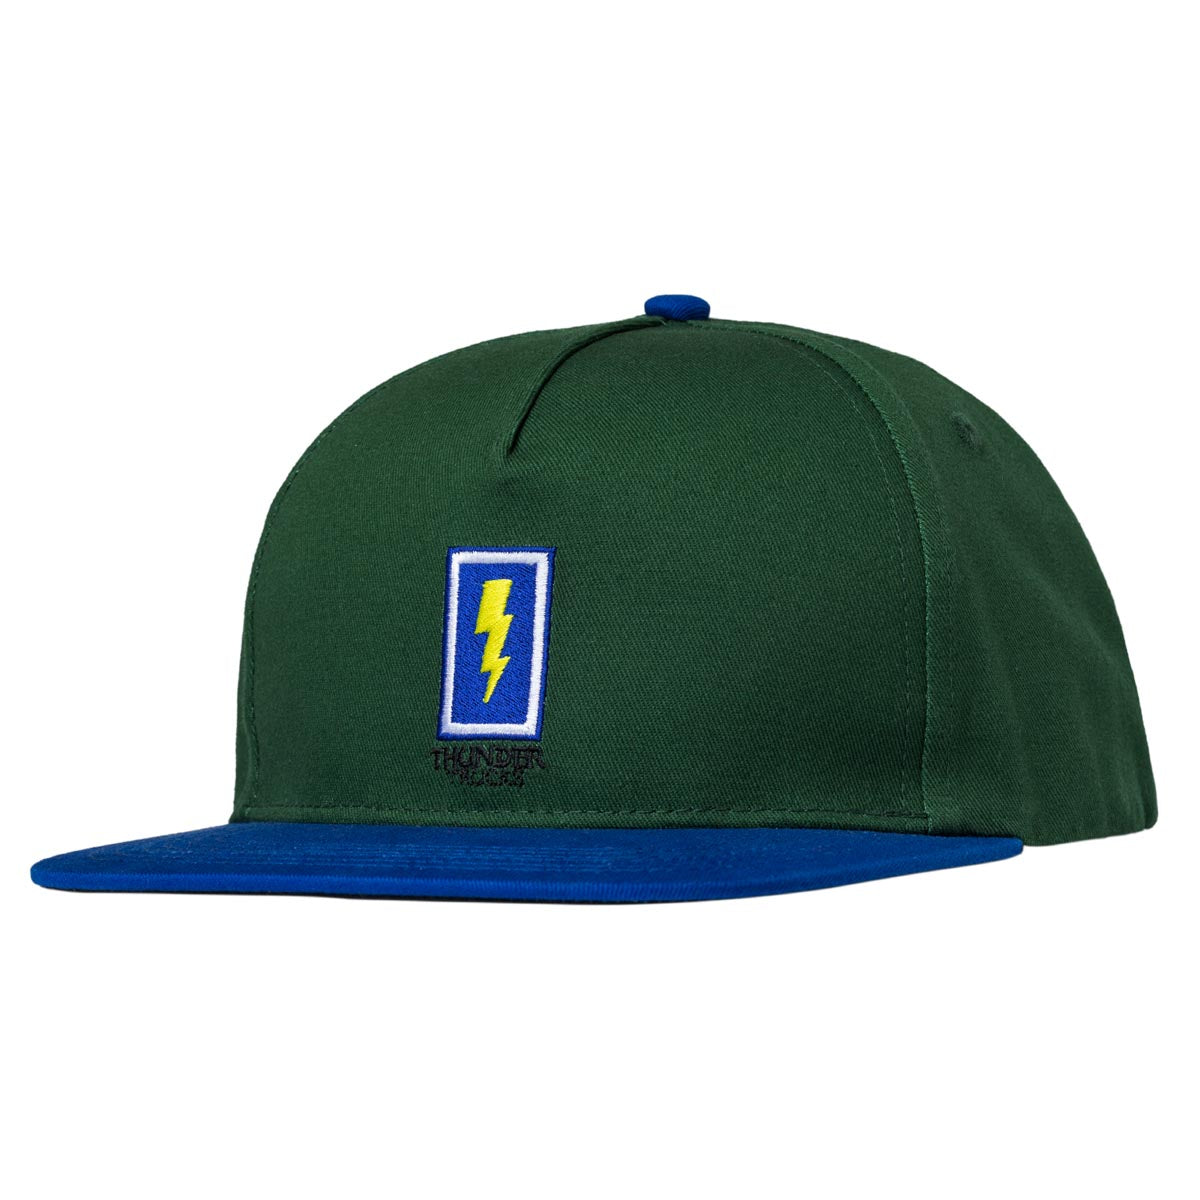 Thunder Boxed Bolt Hat - Dark Green/Blue image 1